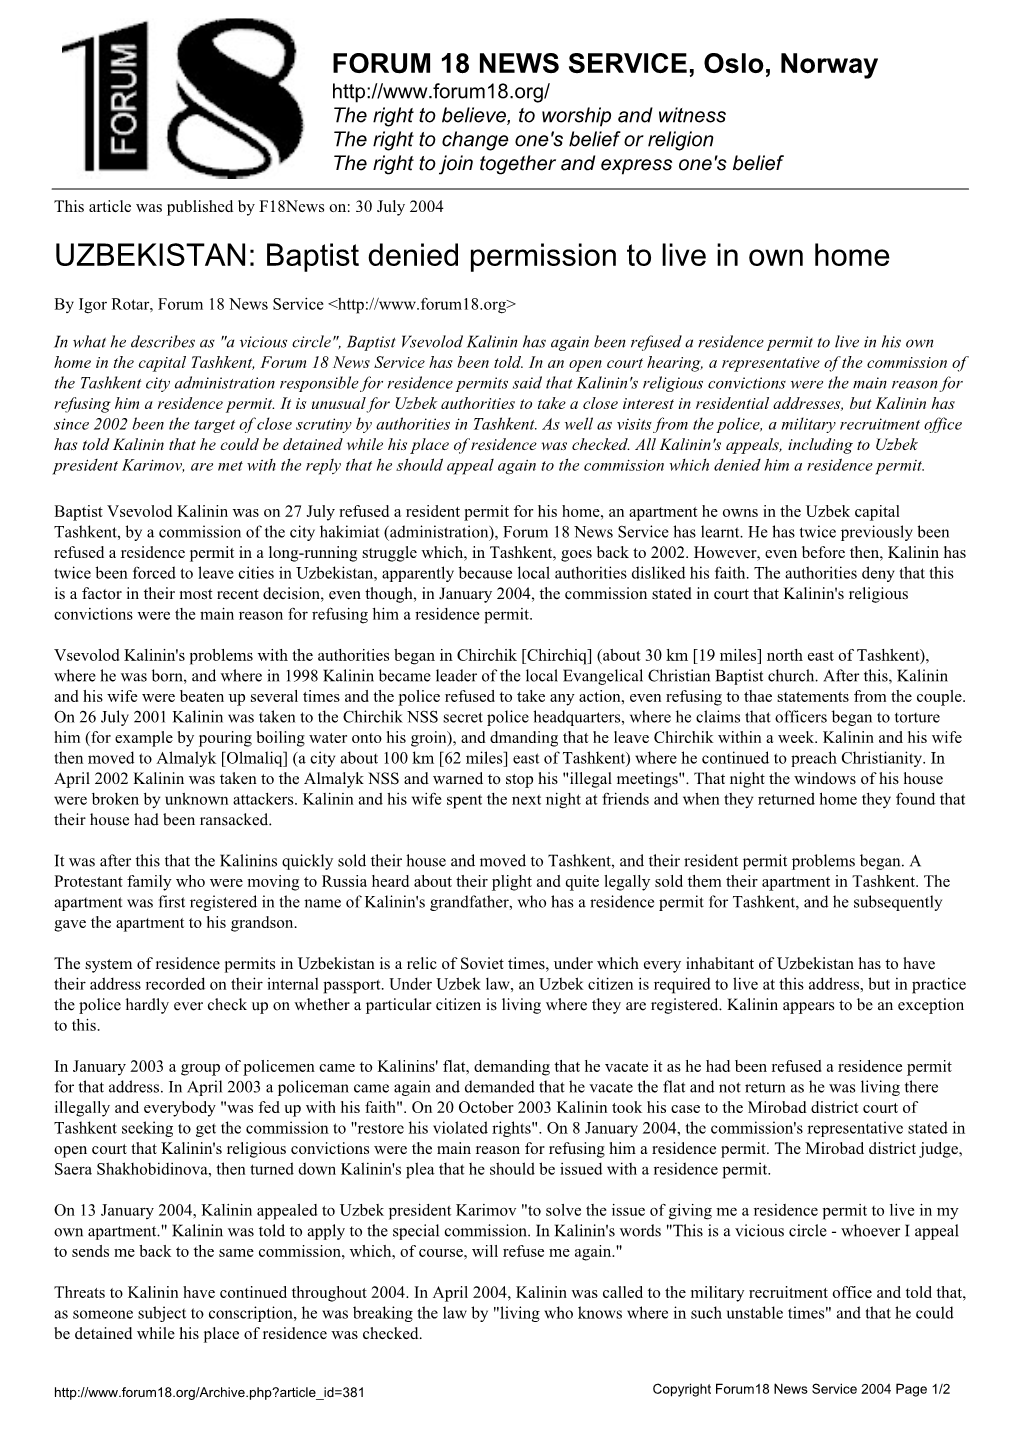 UZBEKISTAN: Baptist Denied Permission to Live in Own Home